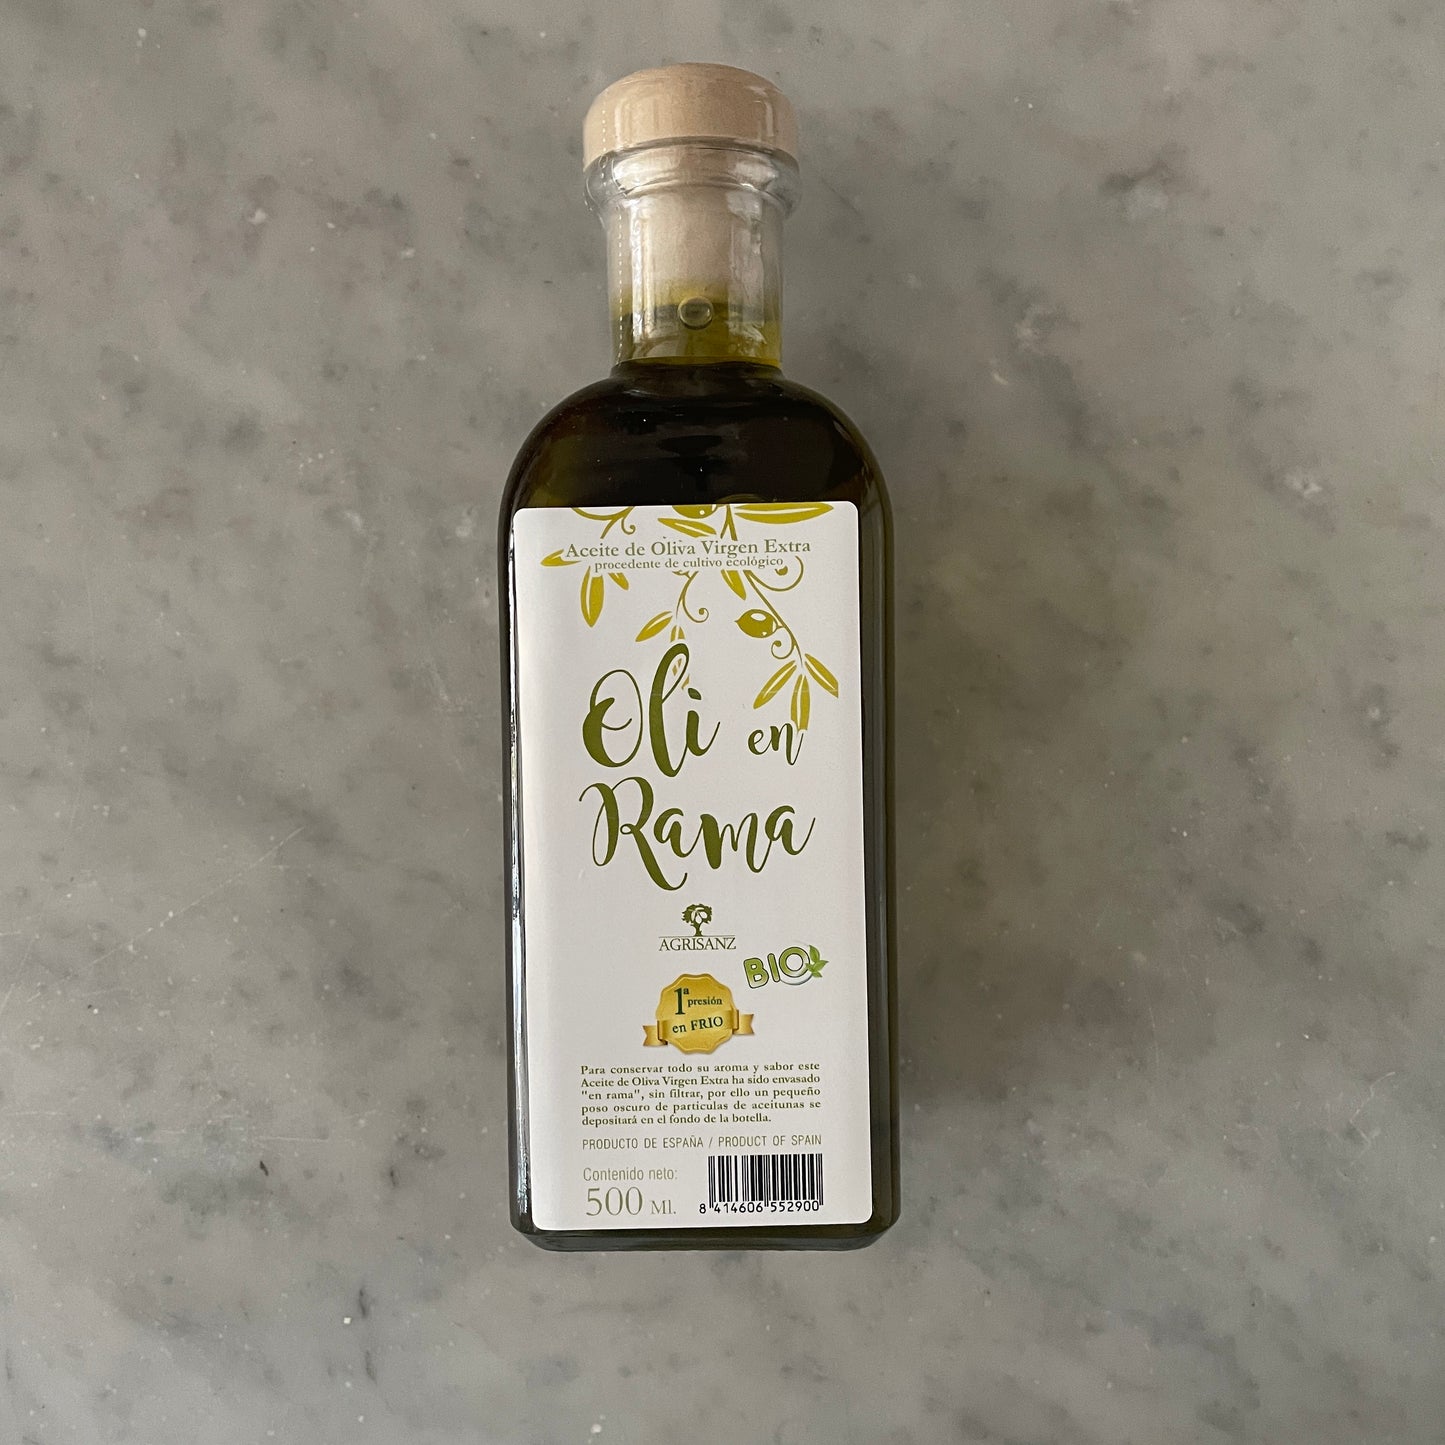 Oli en Rama Unfiltered Extra Virgin Olive Oil